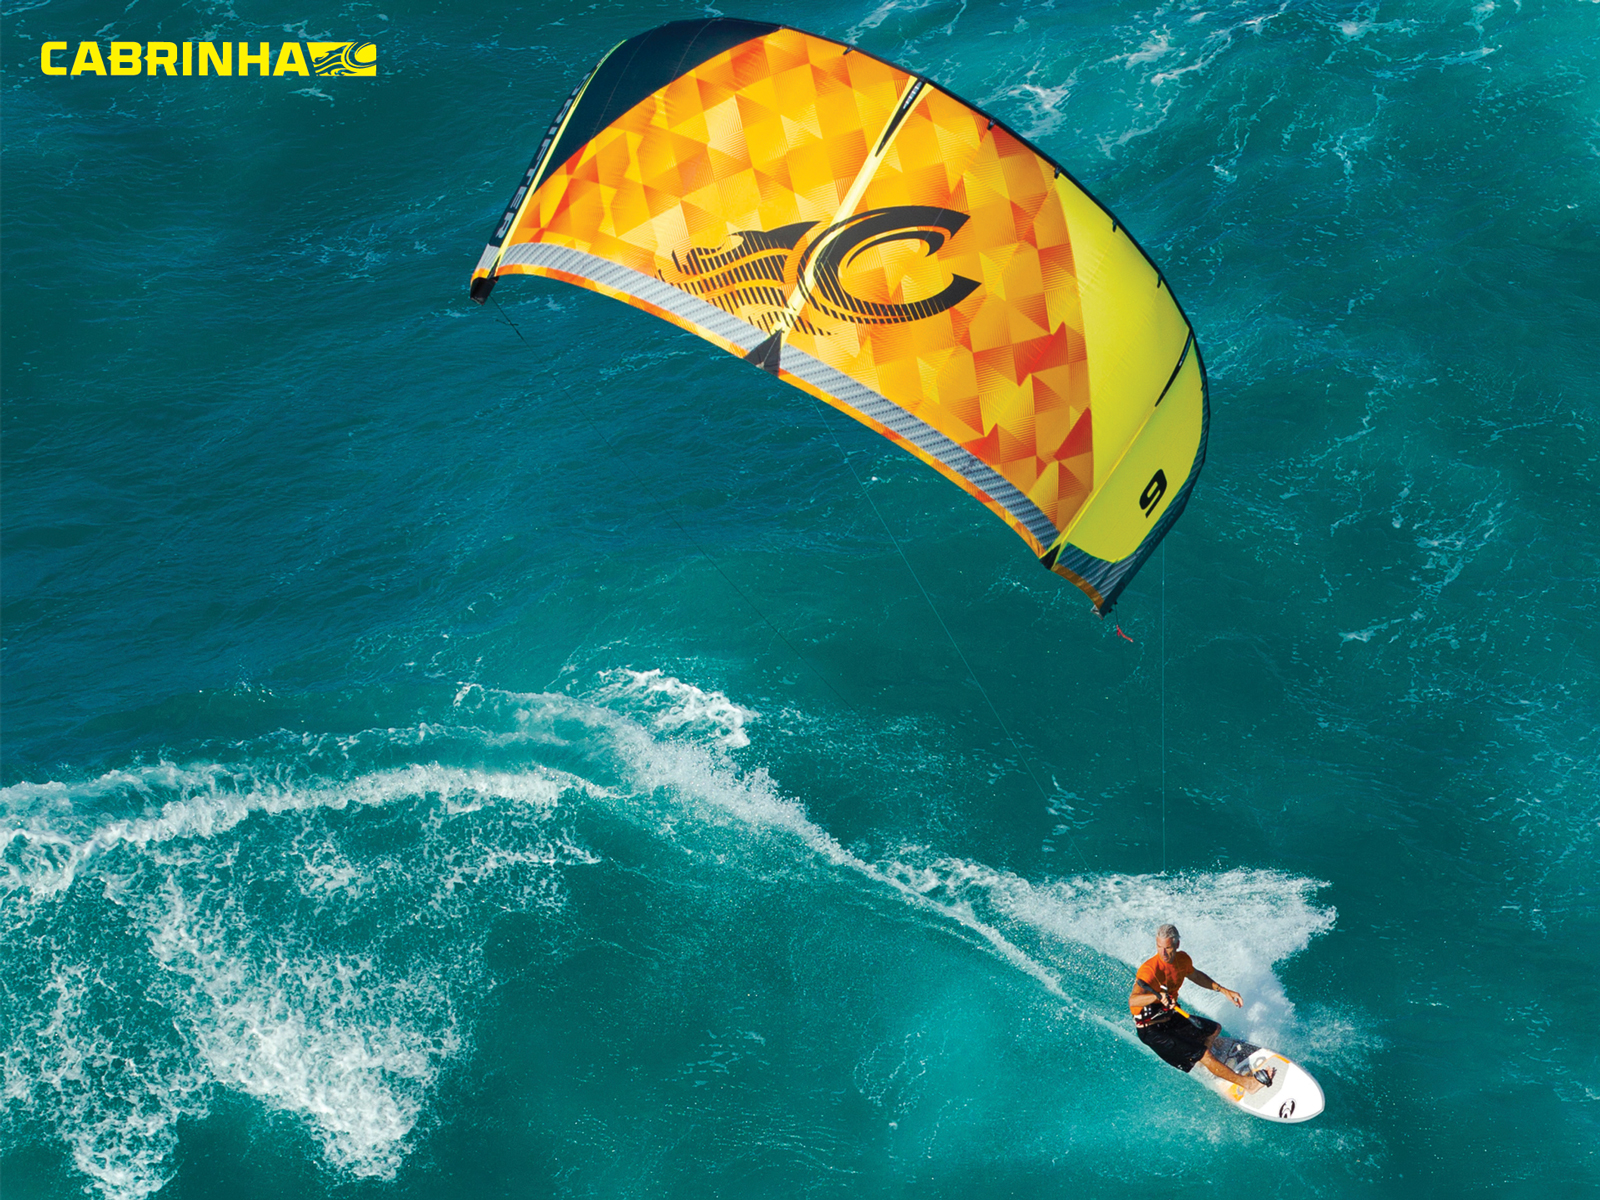 kitesurf wallpaper image - Pete Cabrinha on the 2015 drifter kite in Hawaii. - in resolution: Standard 4:3 1600 X 1200